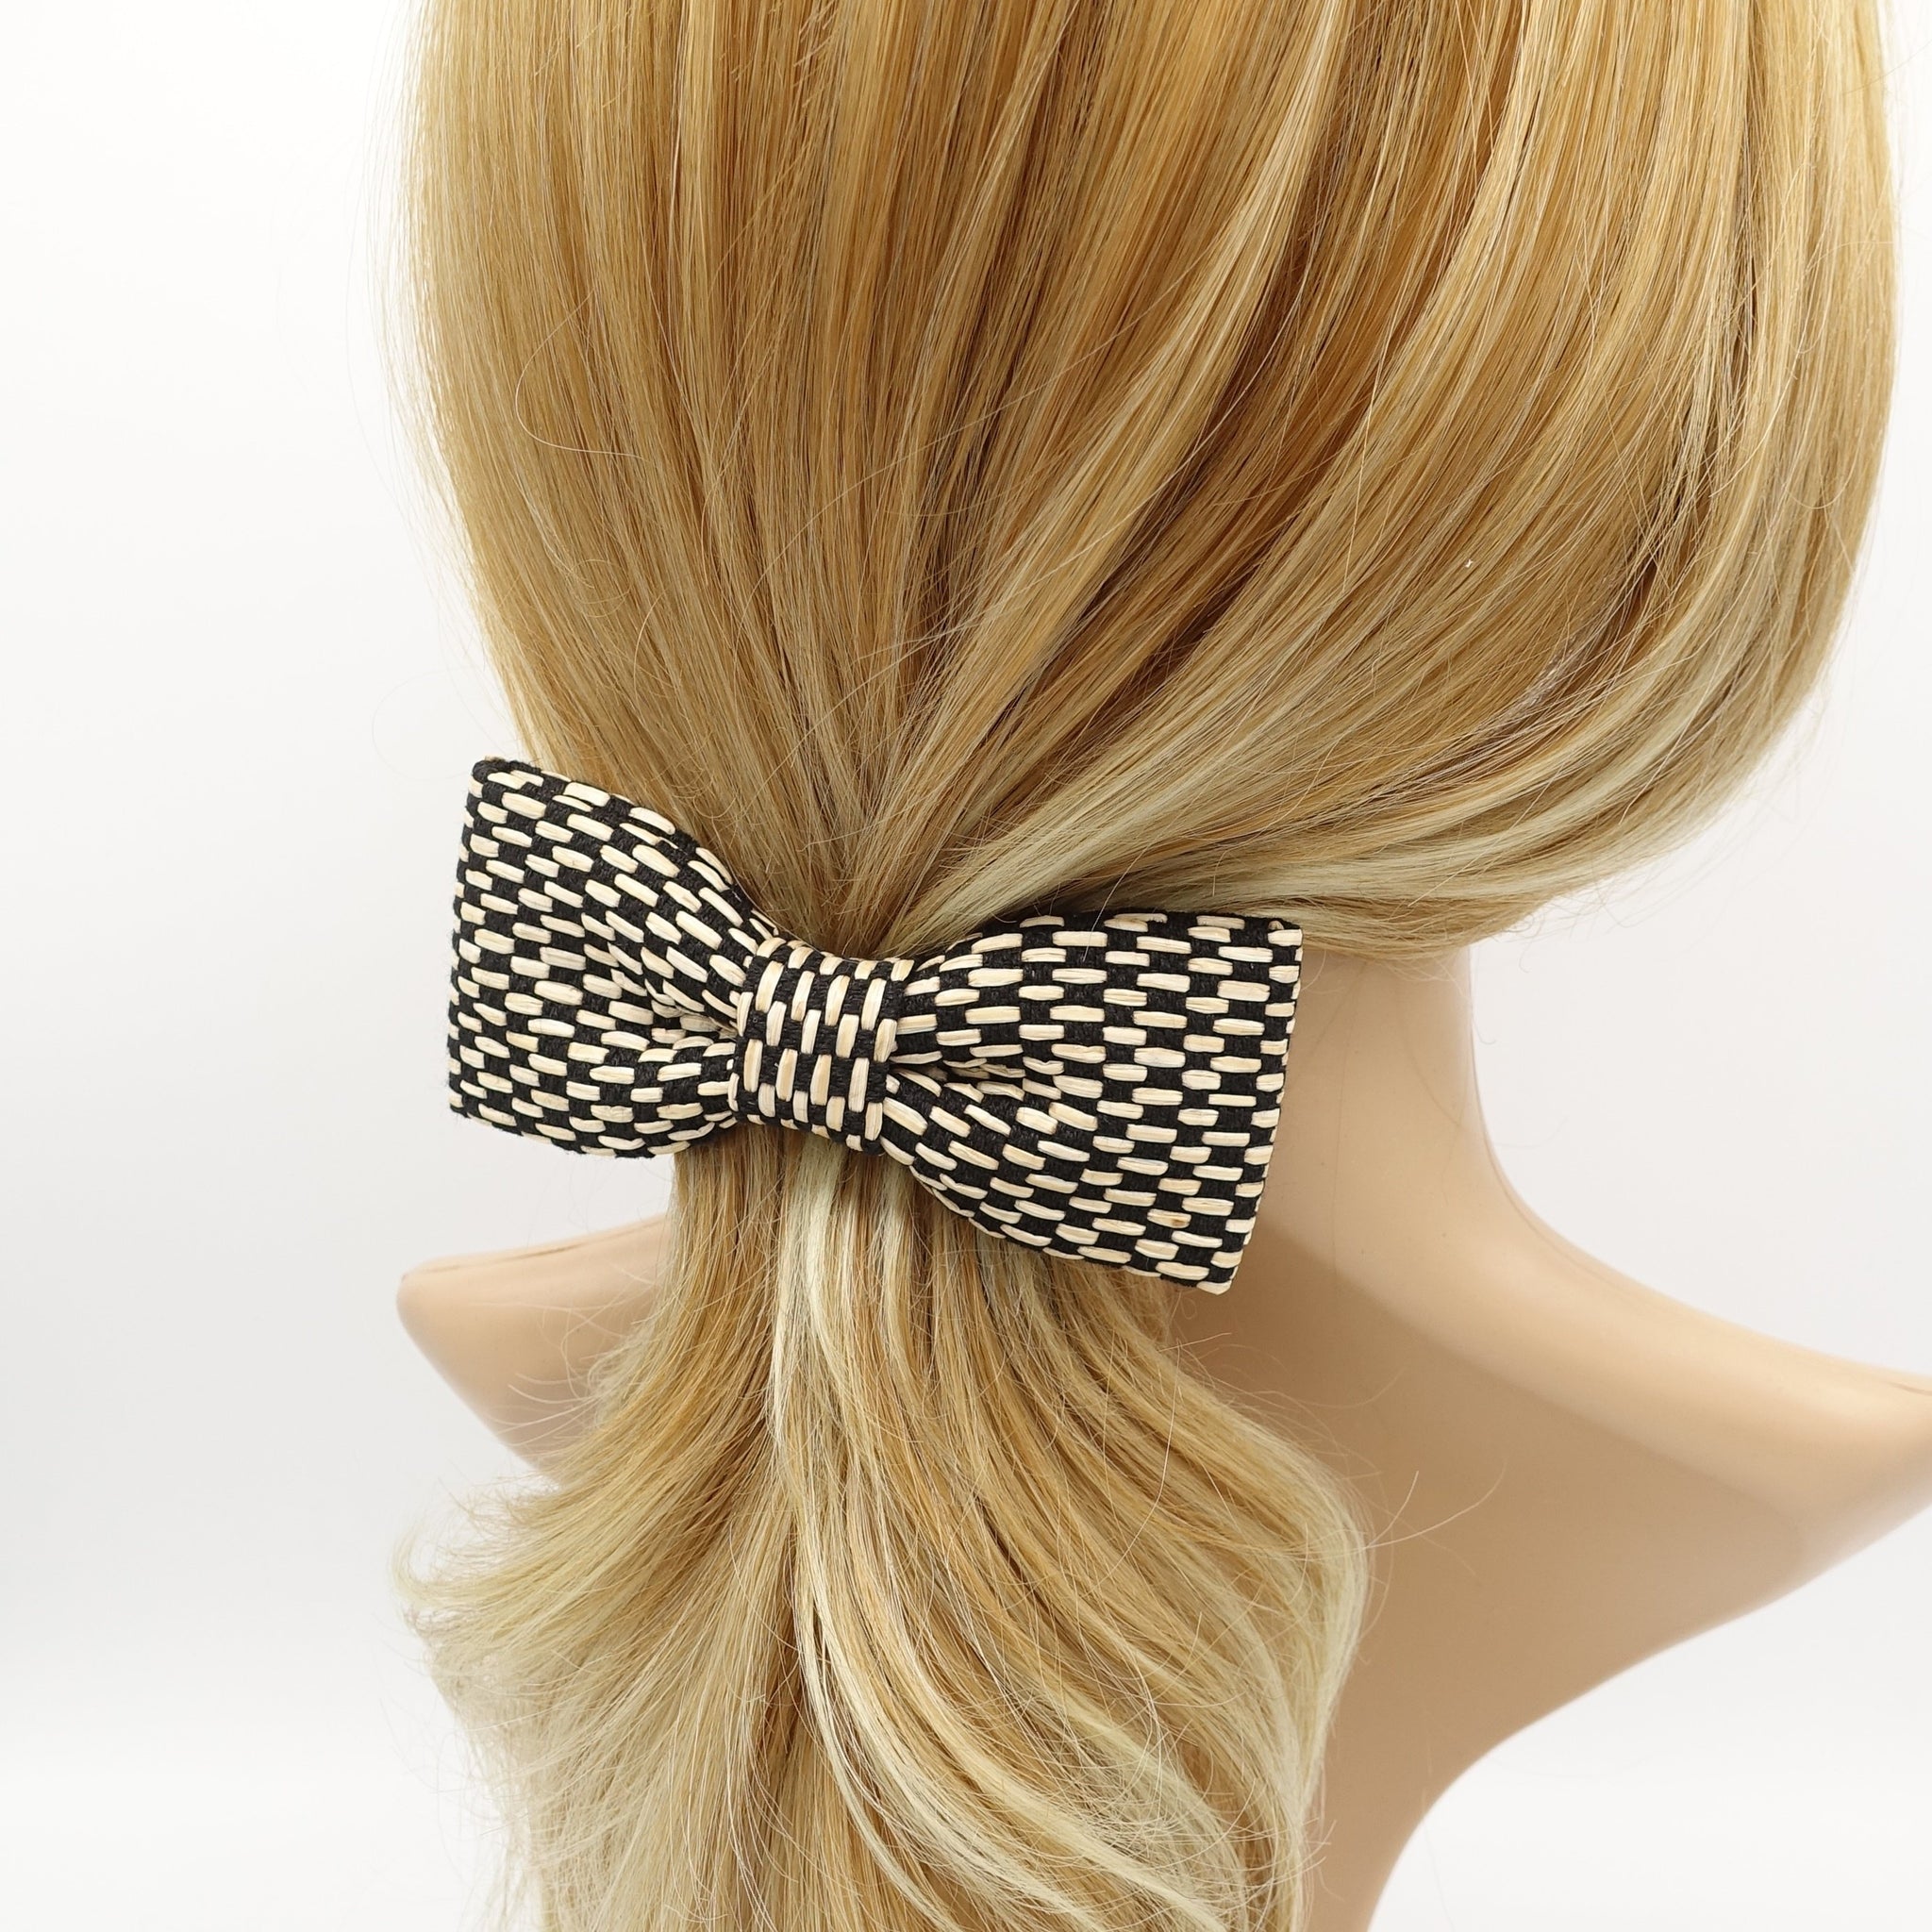 VeryShine claw/banana/barrette straw hair bow imitated rattan hair accessory for women